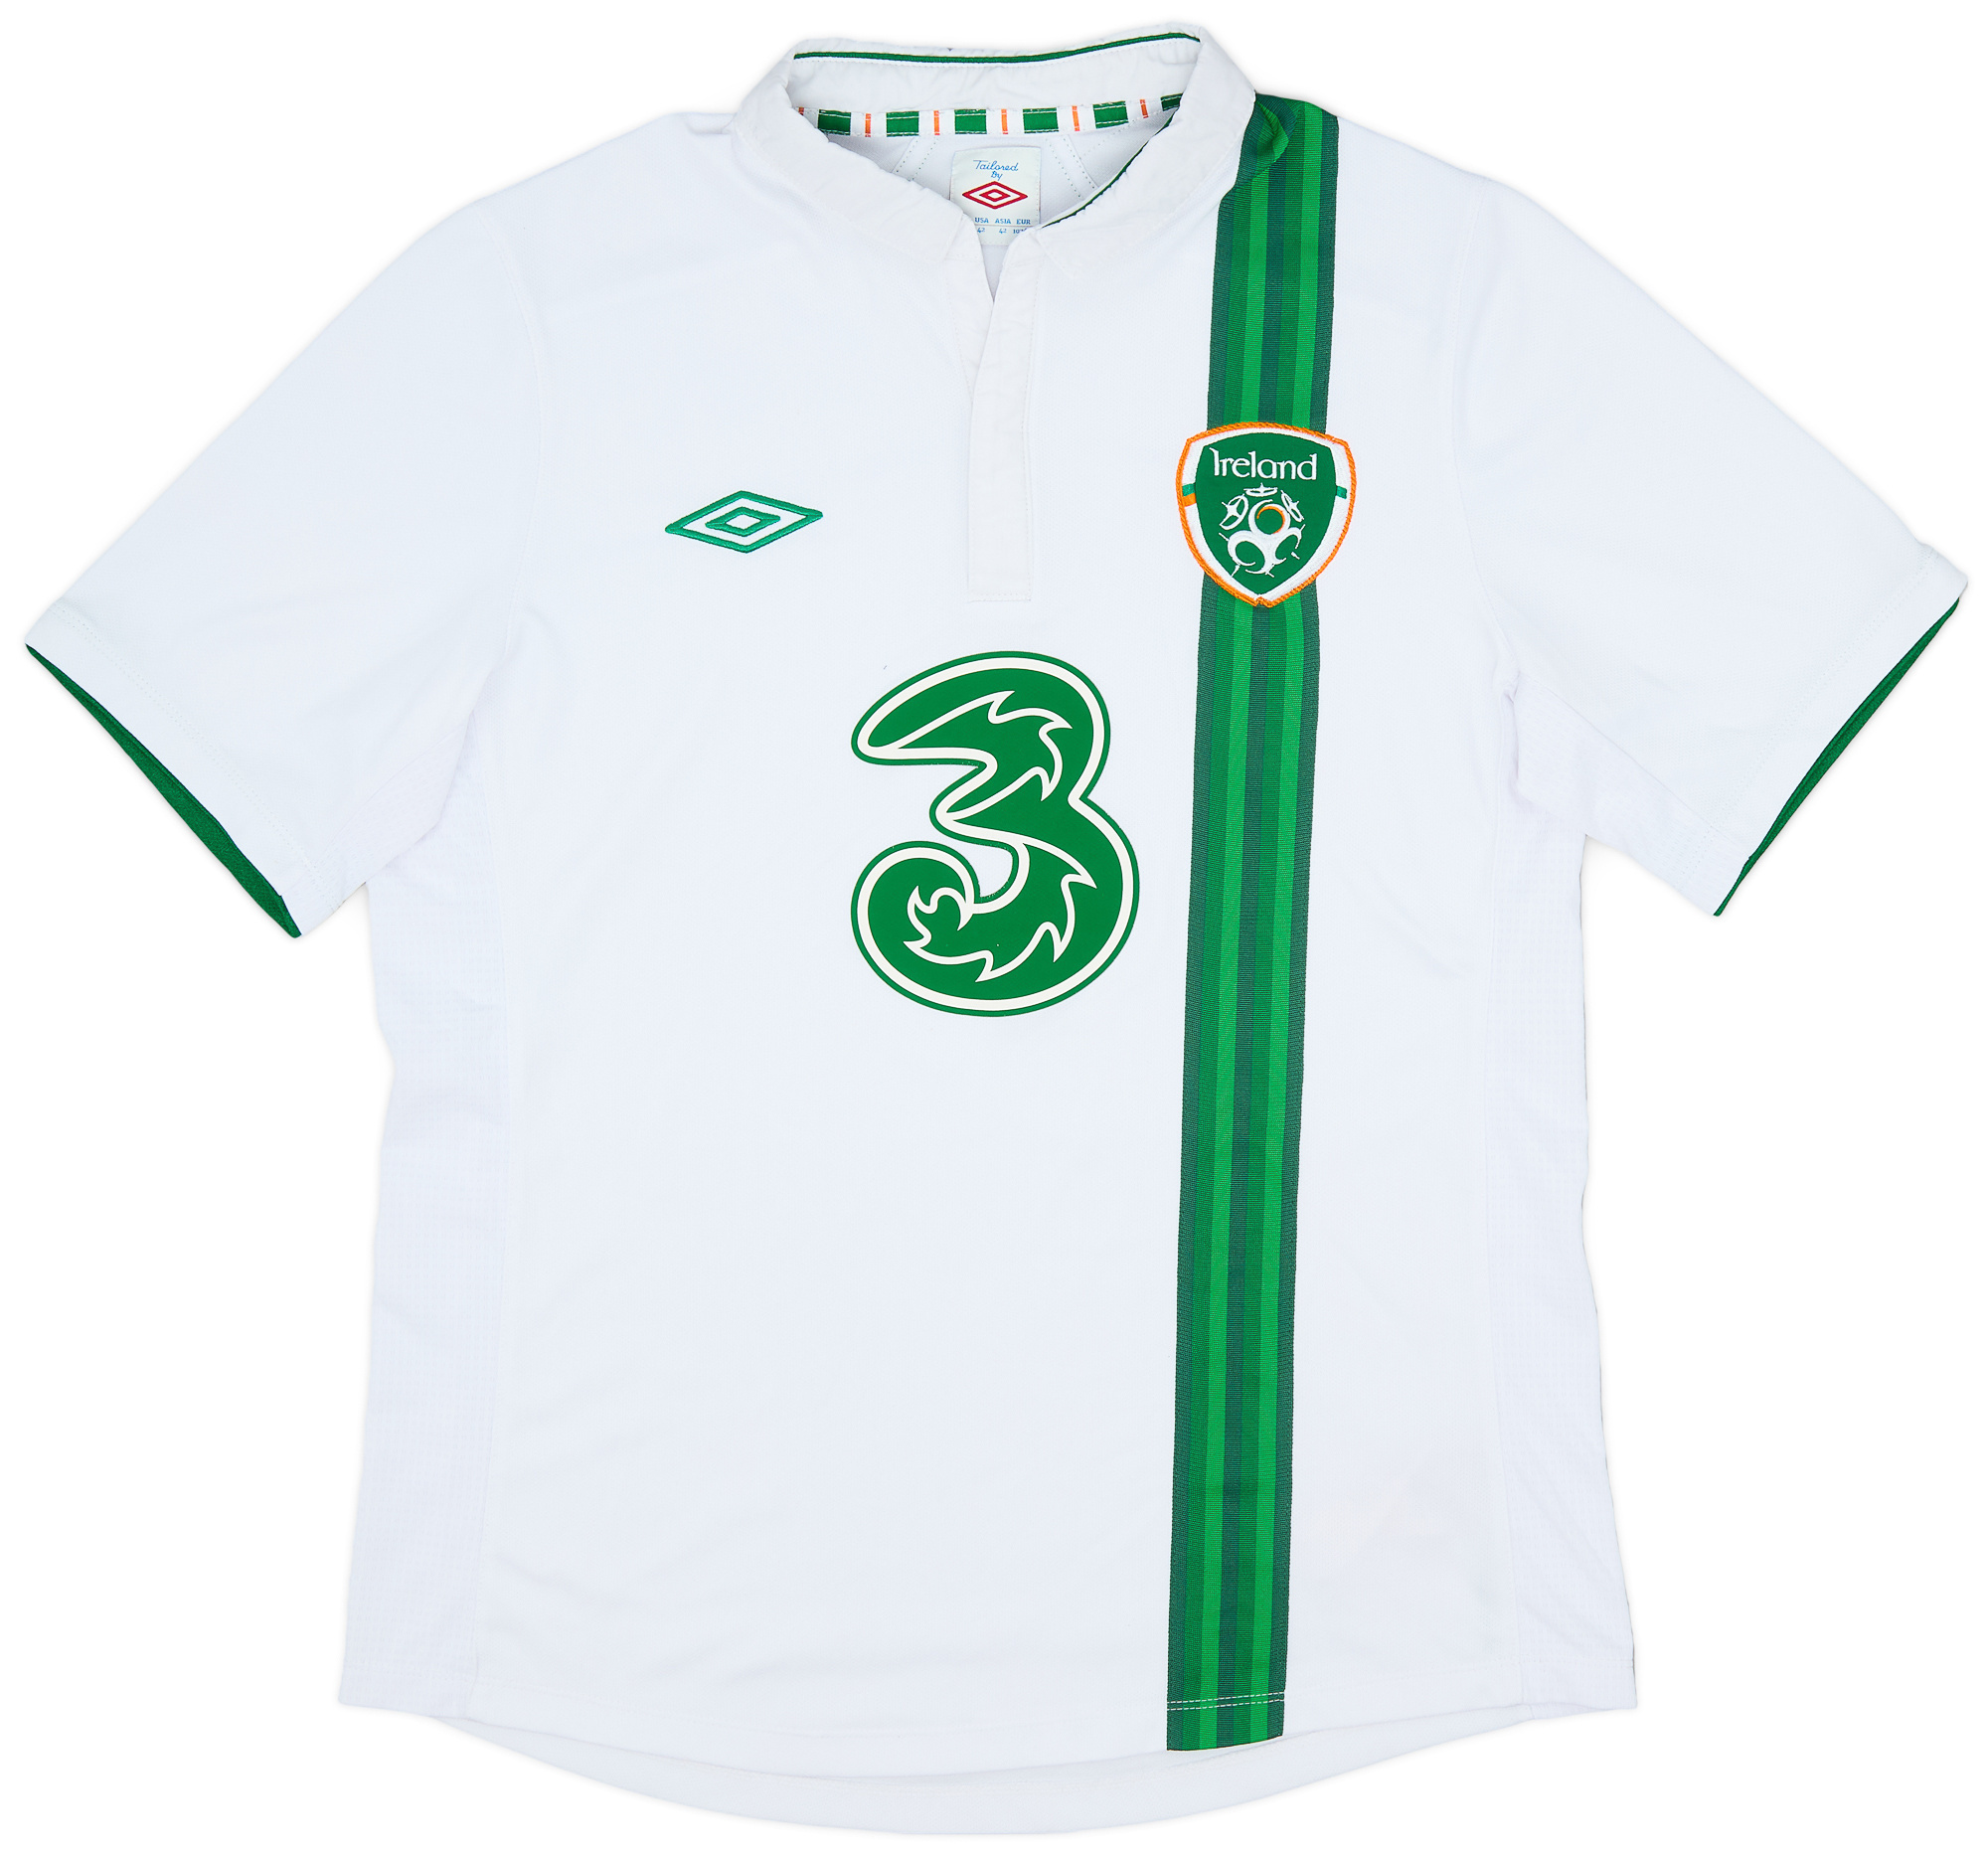 2012-13 Republic of Ireland Away Shirt - 8/10 - ()